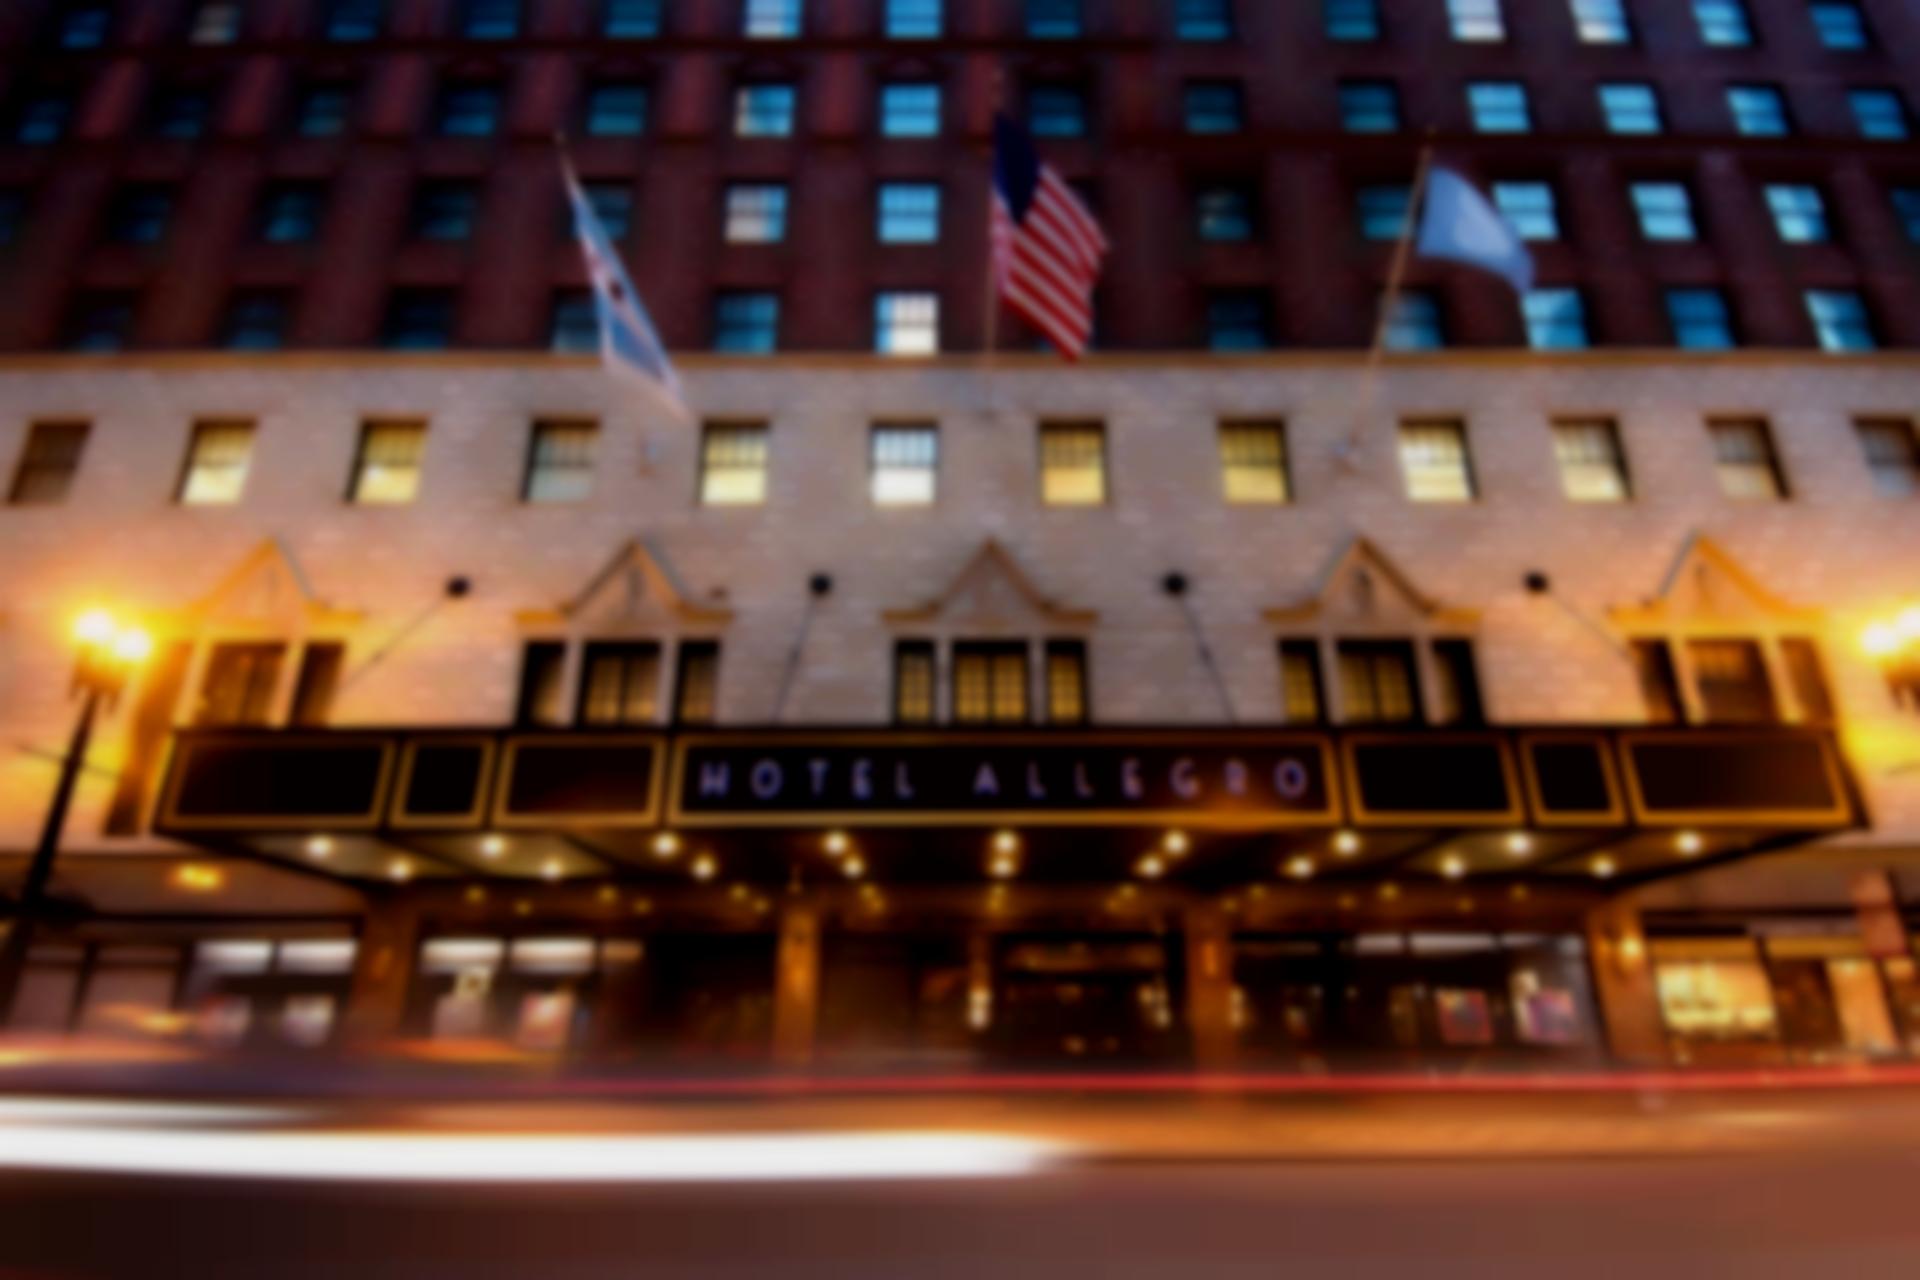 The Allegro Royal Sonesta Hotel Chicago Loop